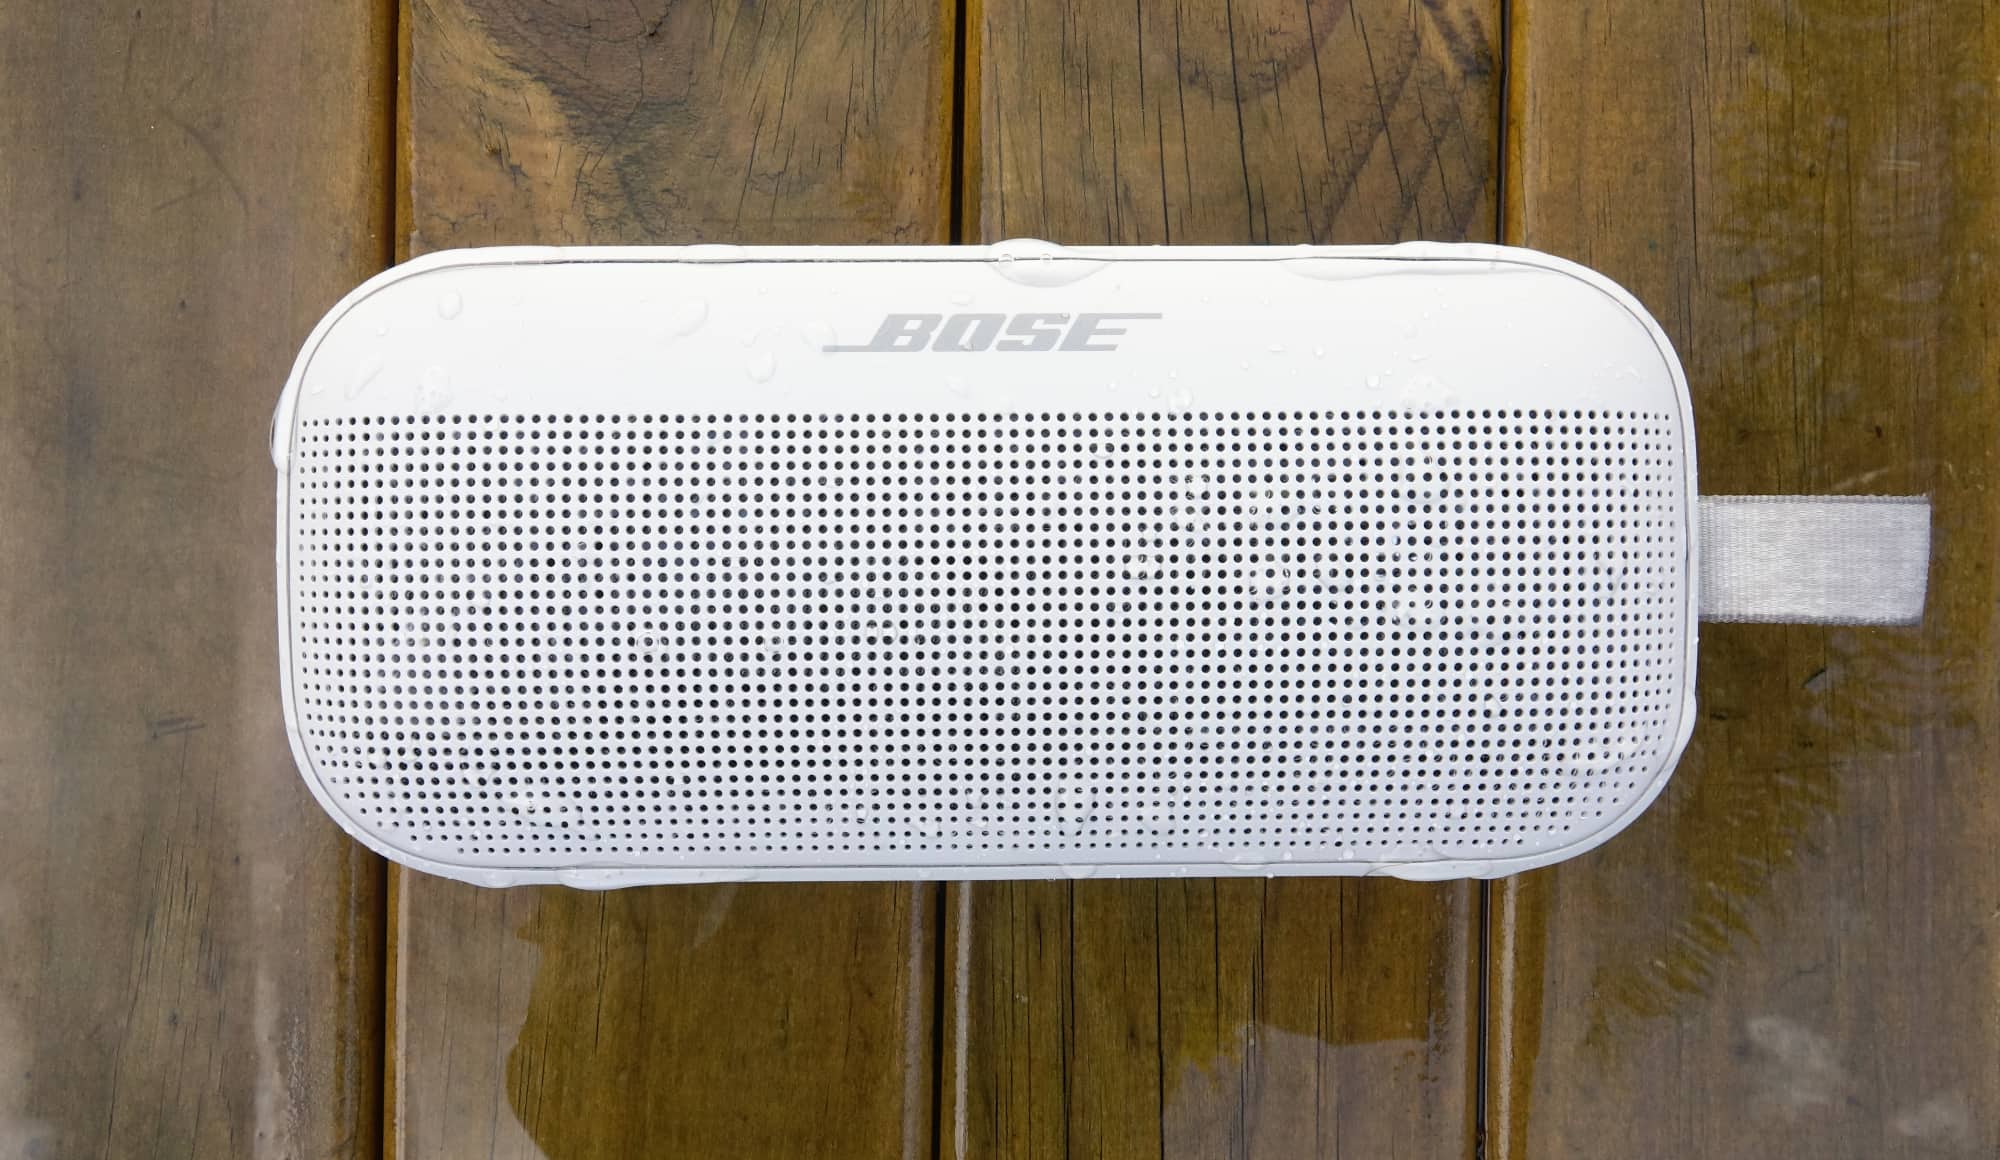 Bose SoundLink Flex Bluetooth Speaker - Black Reviews